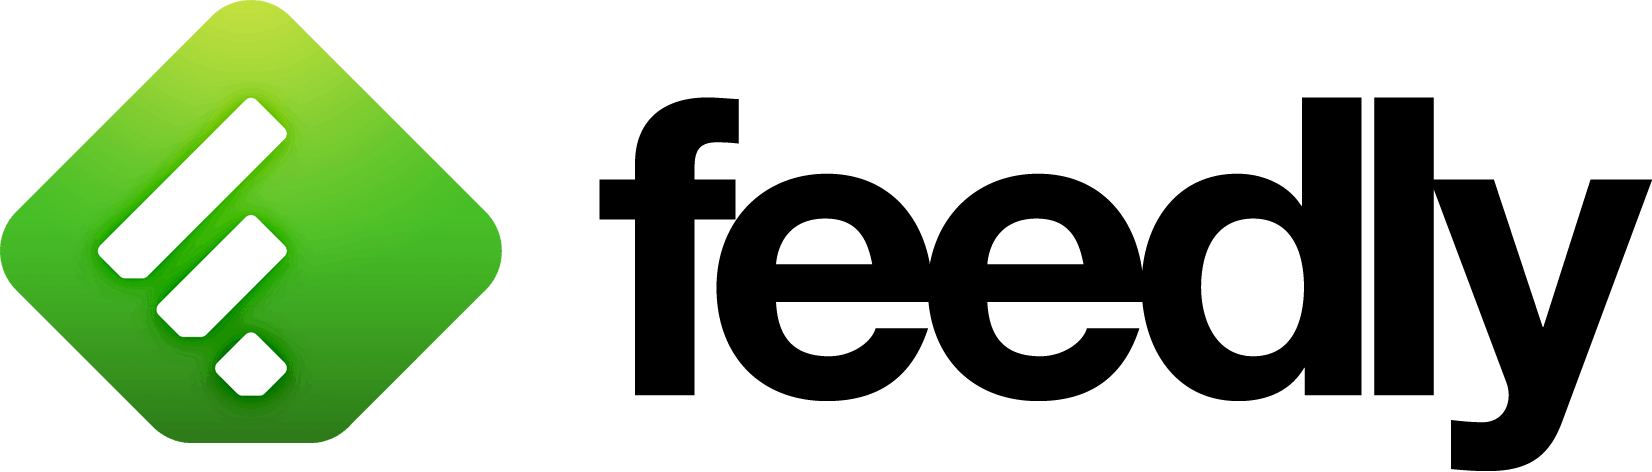 Feedly_Logo_Shareaaholic